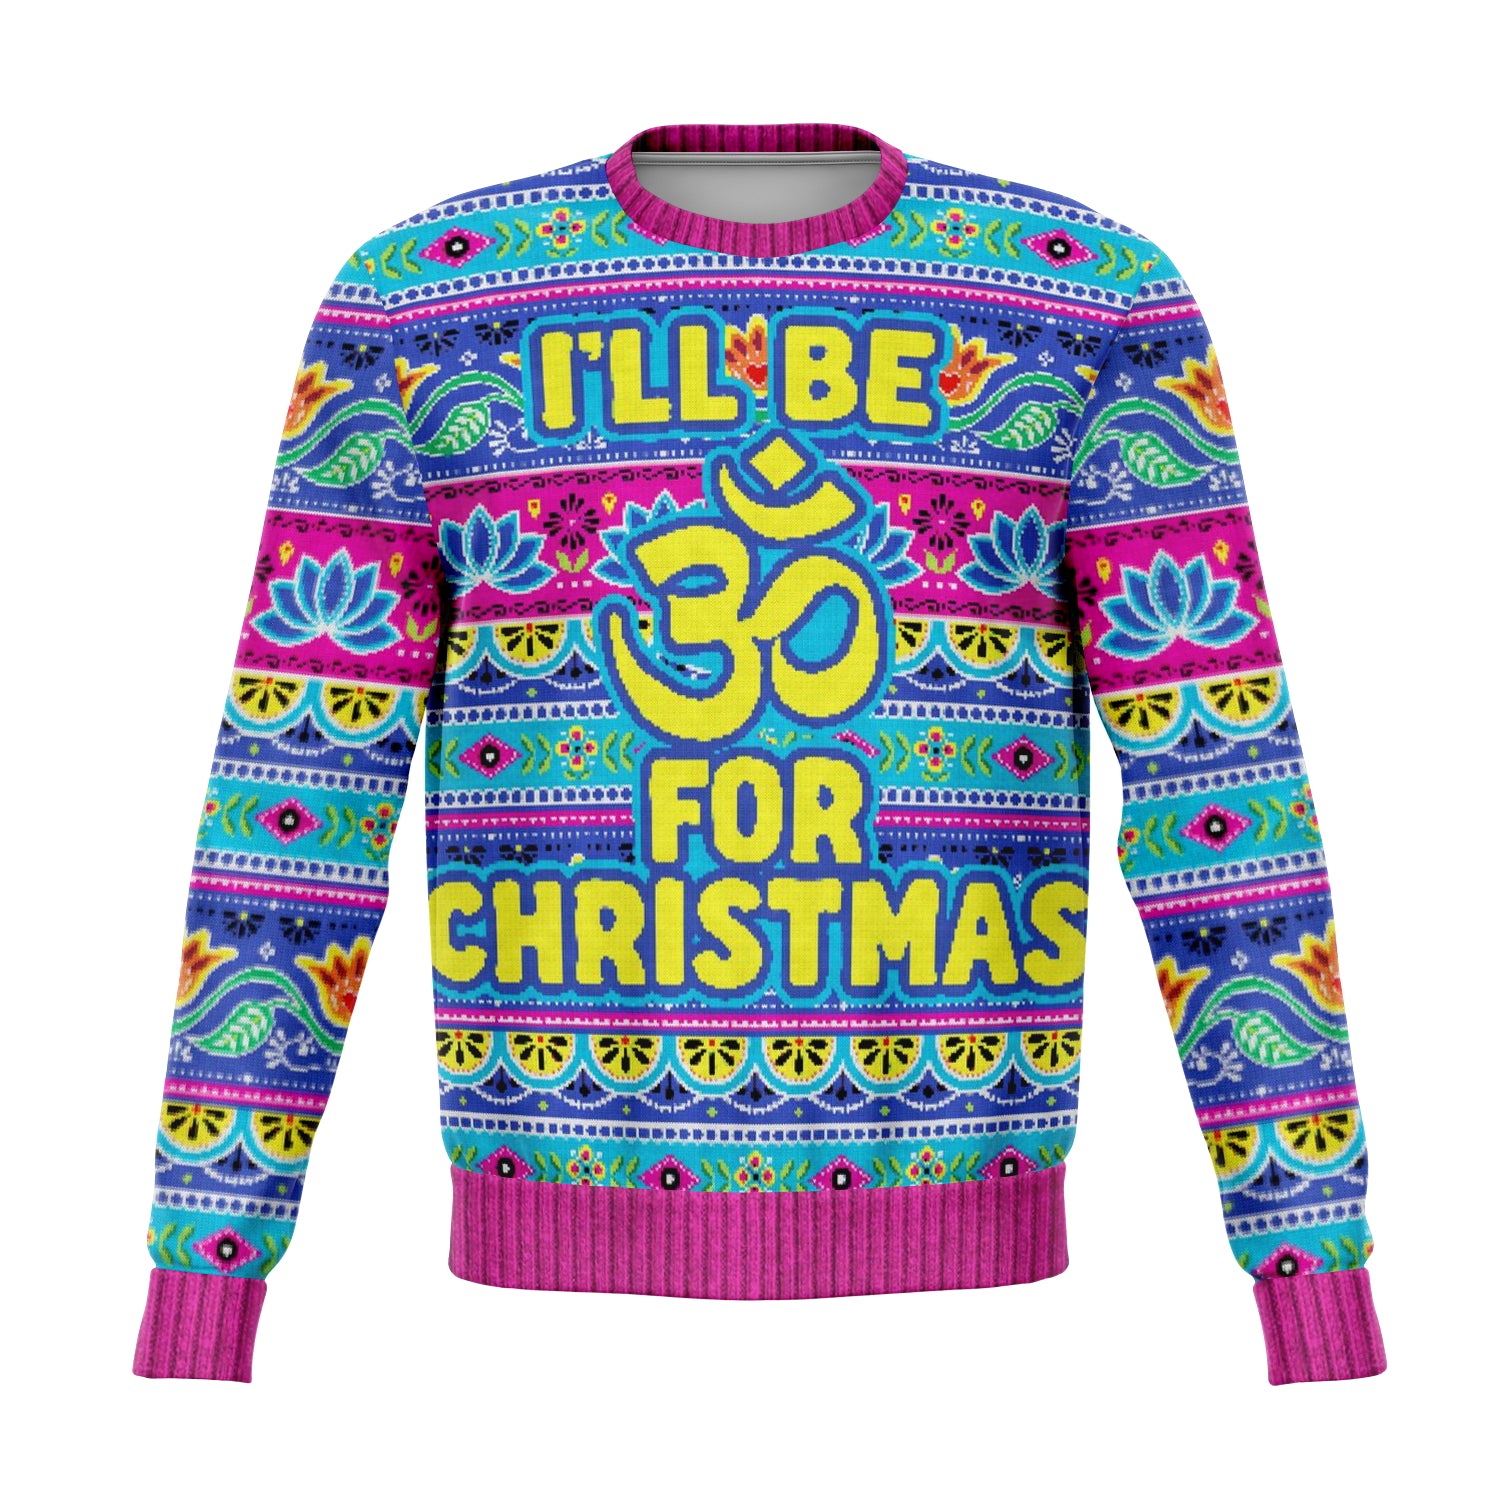 I'll Be Om for Christmas Sweatshirt | Unisex Ugly Christmas Sweater, Xmas Sweater, Holiday Sweater, Festive Sweater, Funny Sweater, Funny Party Shirt